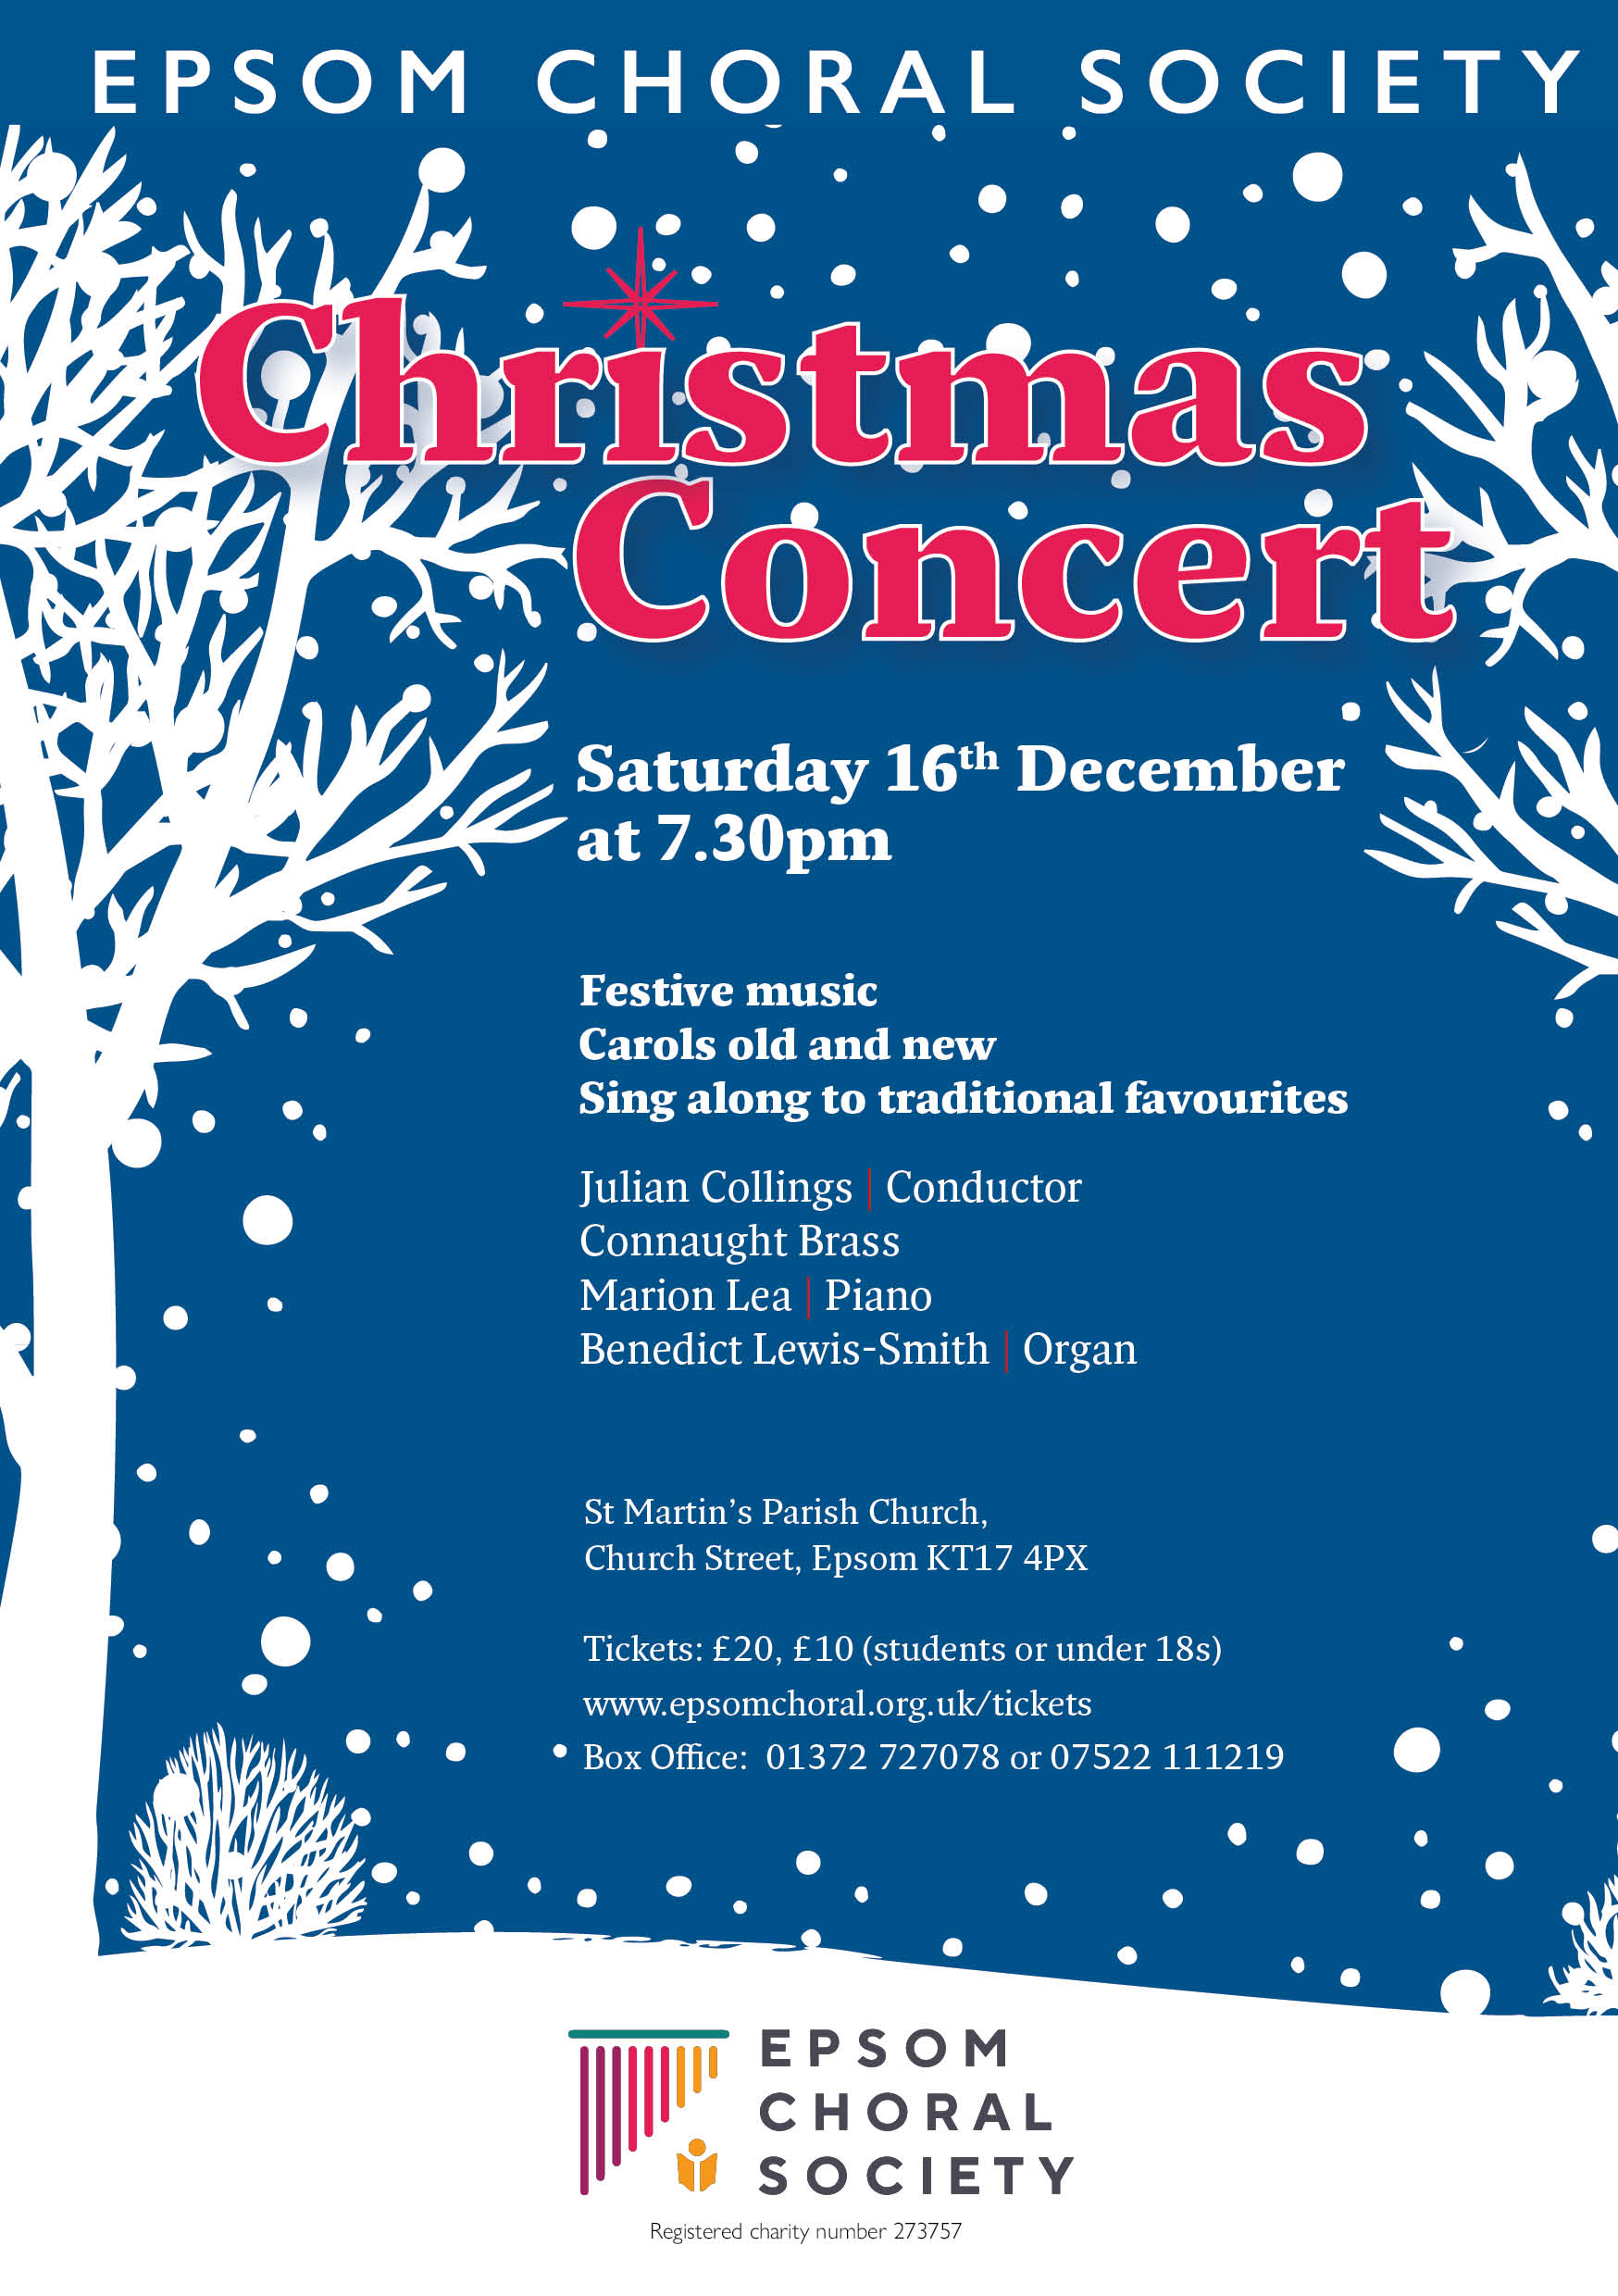 Epsom Choral Society Christmas Concert flyer